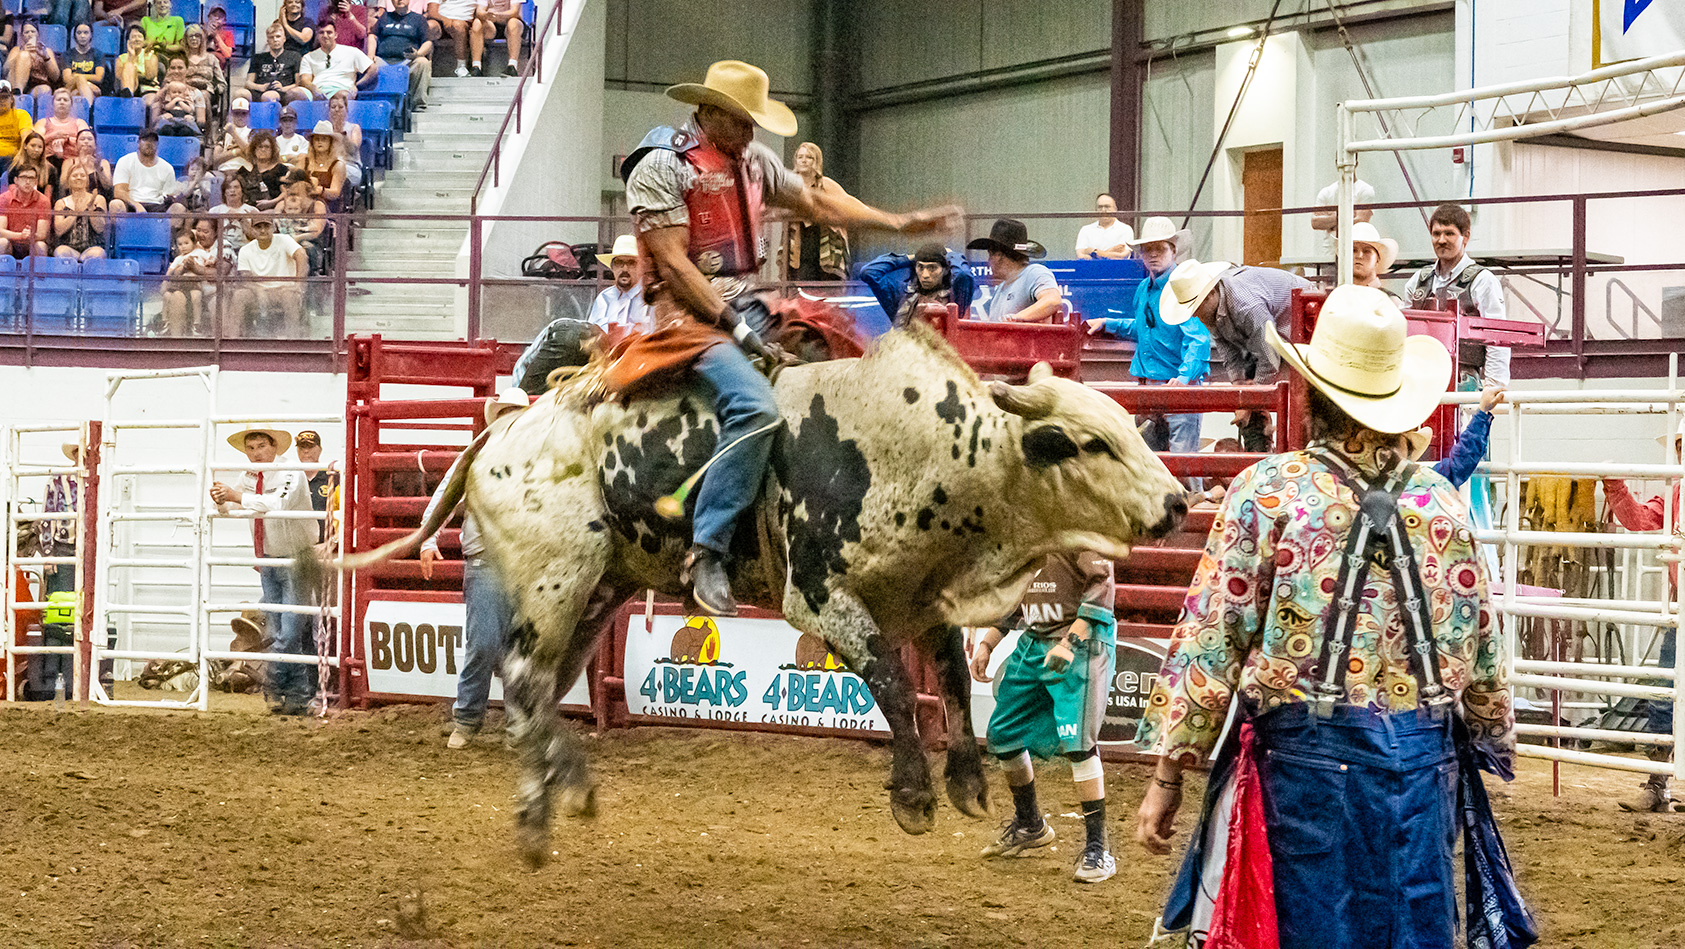 The Bull Rider at the North Dakota State Fair